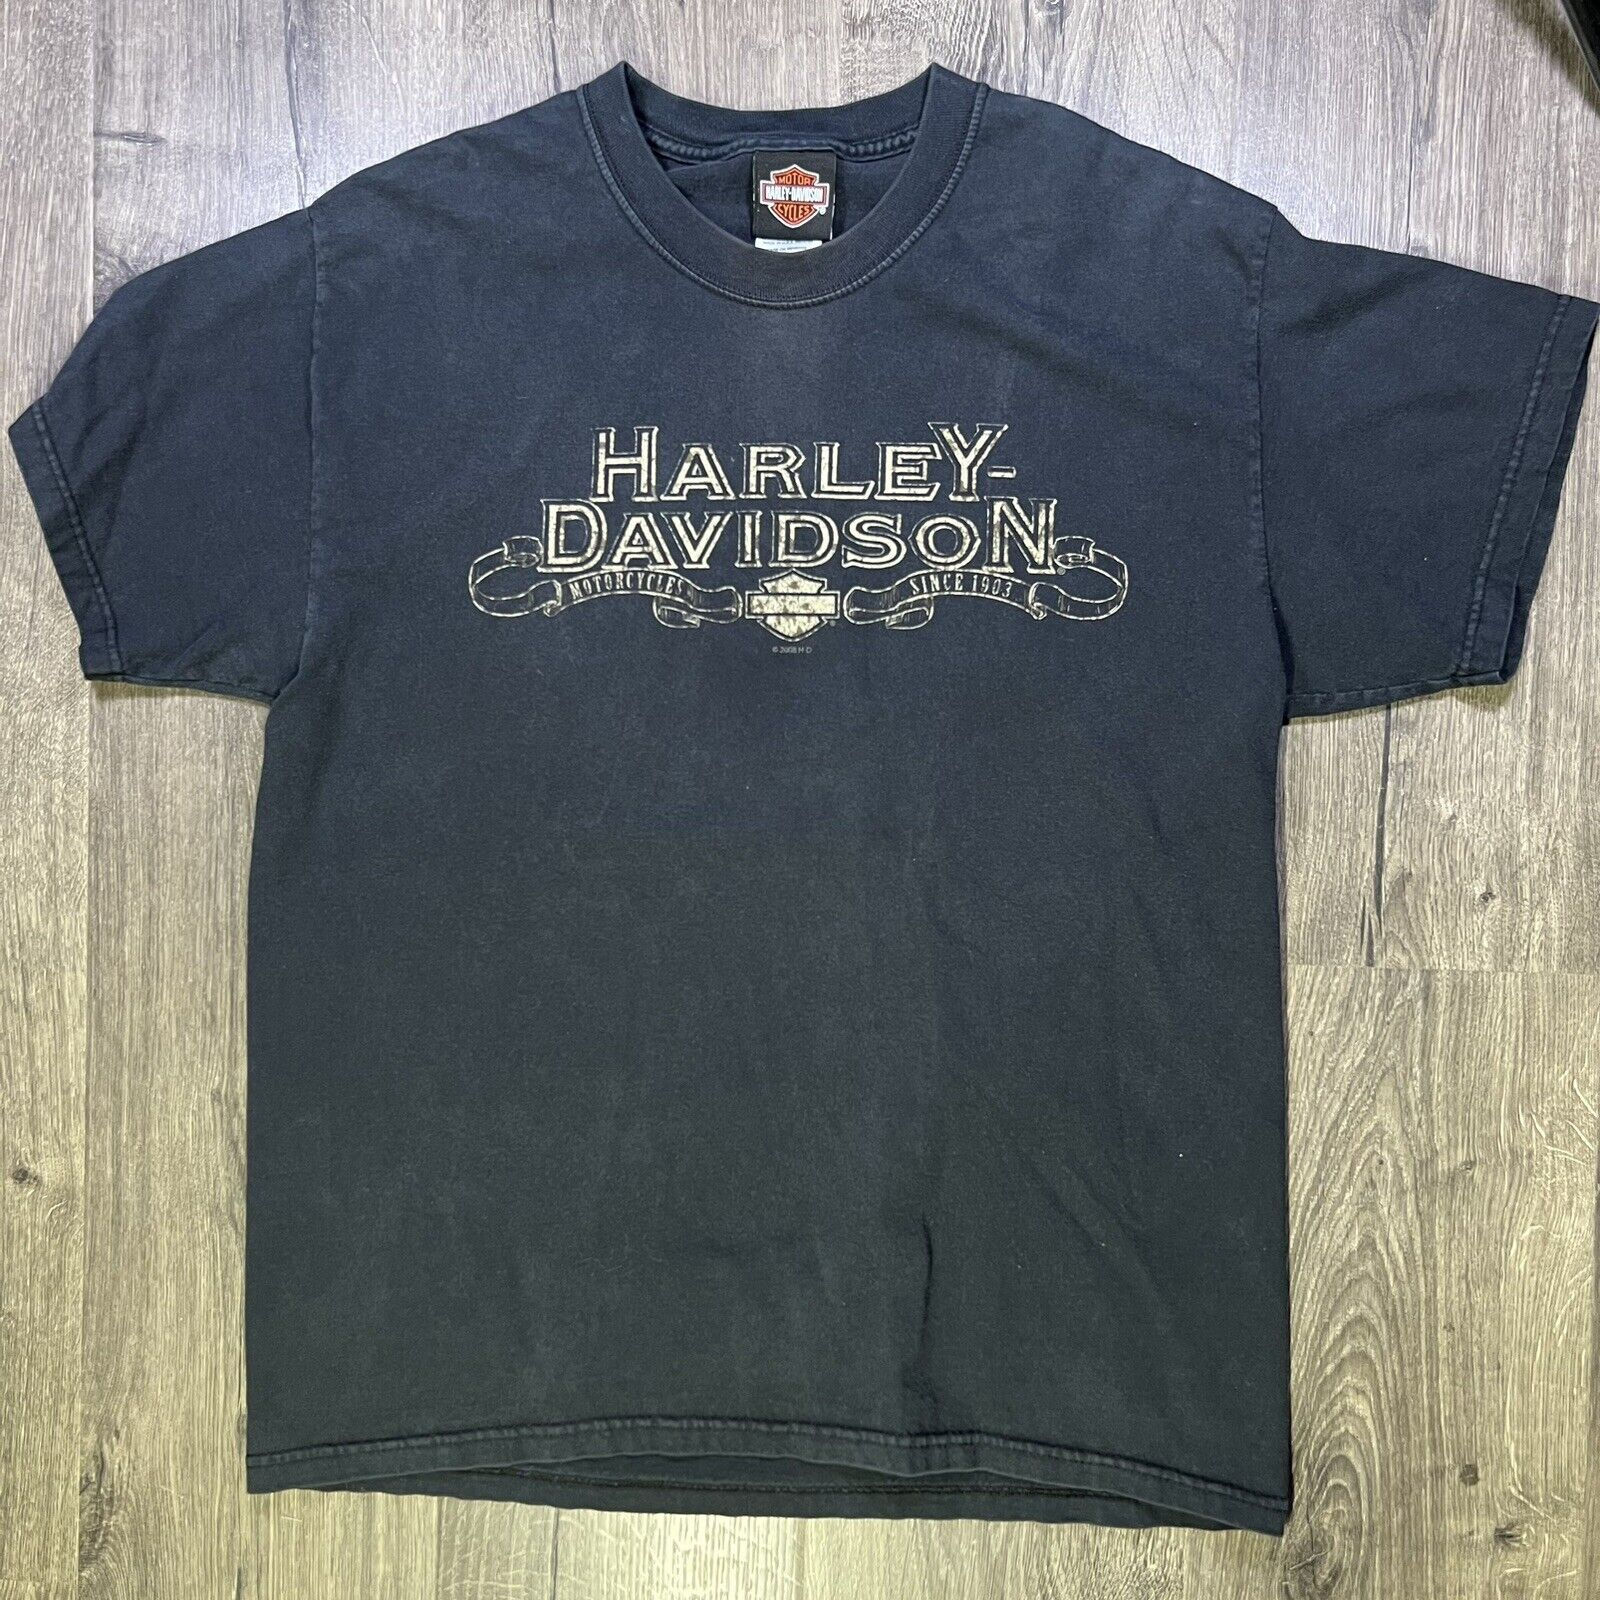 Harley-Davidson 2008 Size Large Washington, Utah T-Shirt